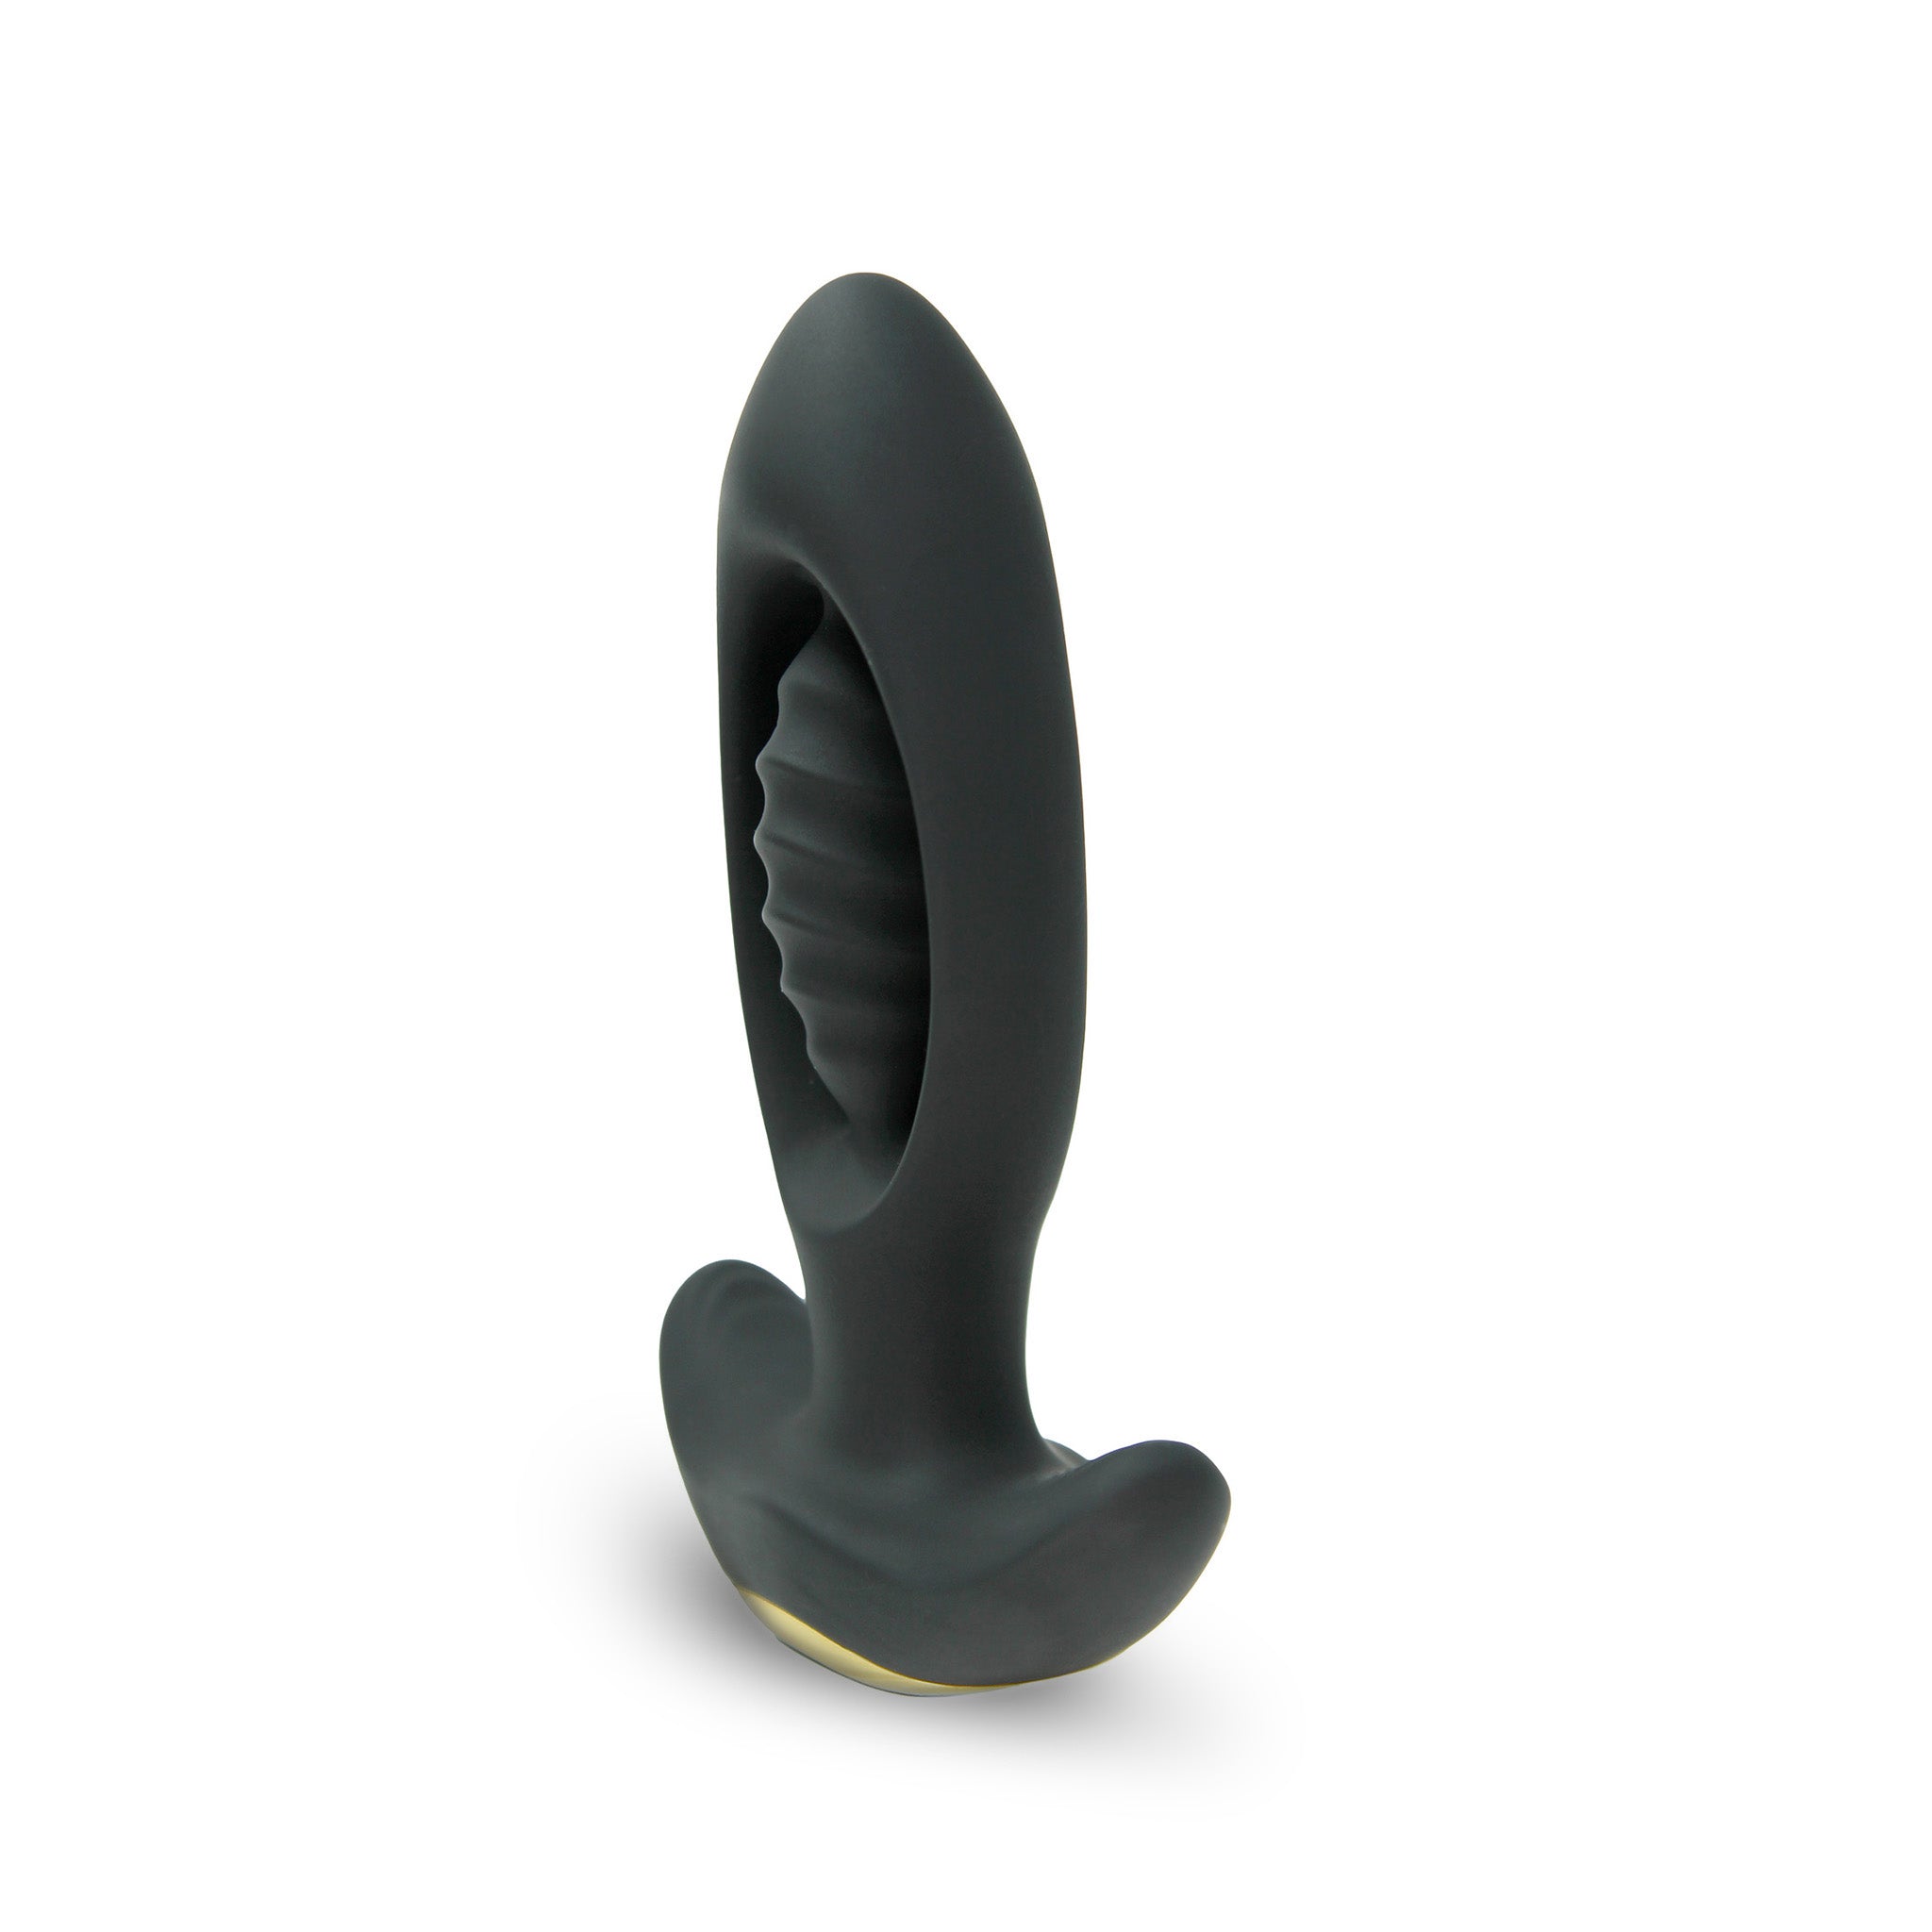 Wearable Vibrating Anal Butt Plug Vibrator Prostate Massager Stimulator Sex Toys